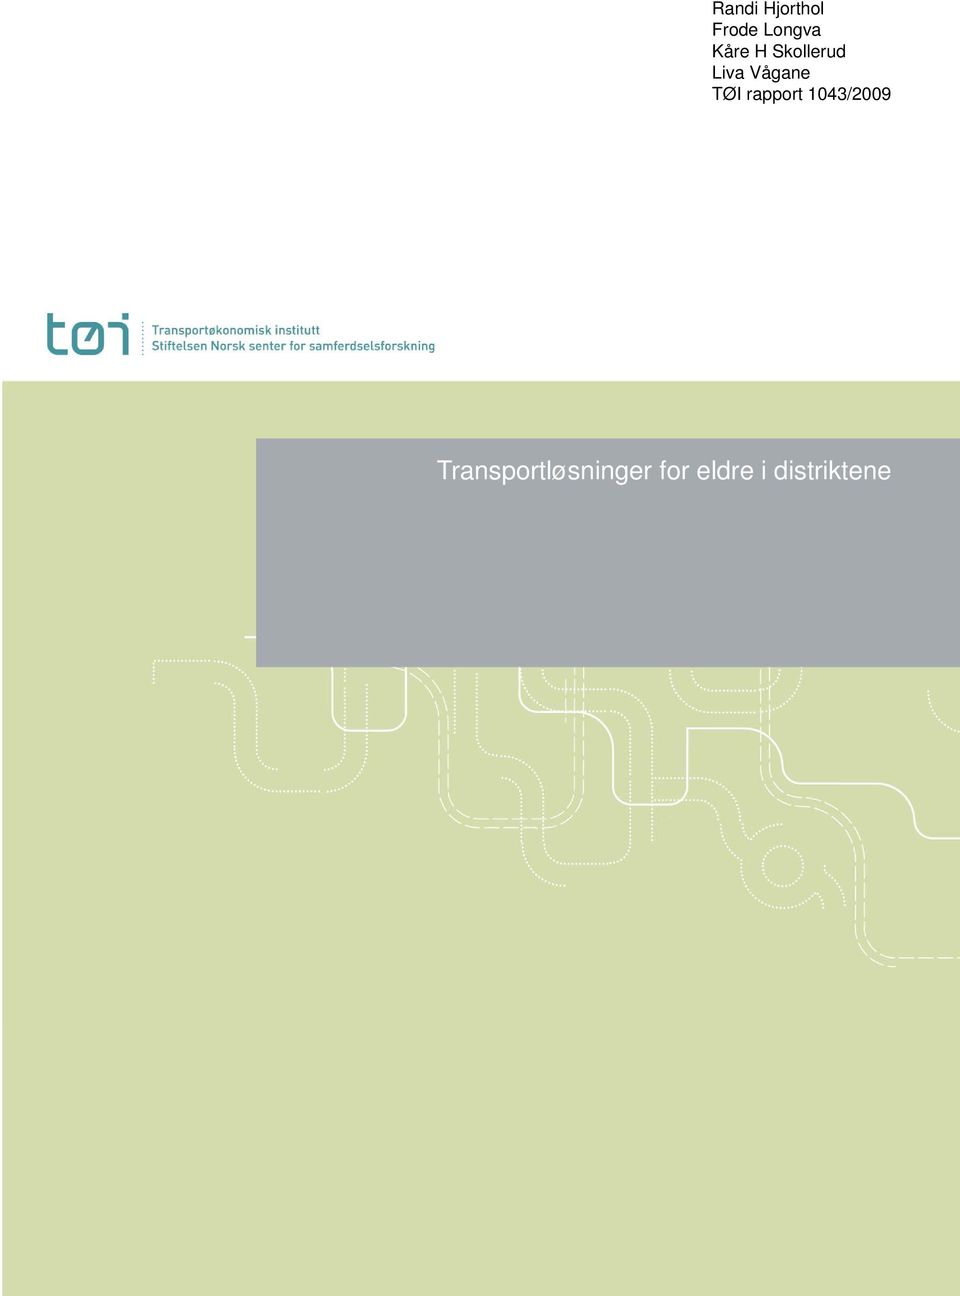 TØI rapport 1043/2009